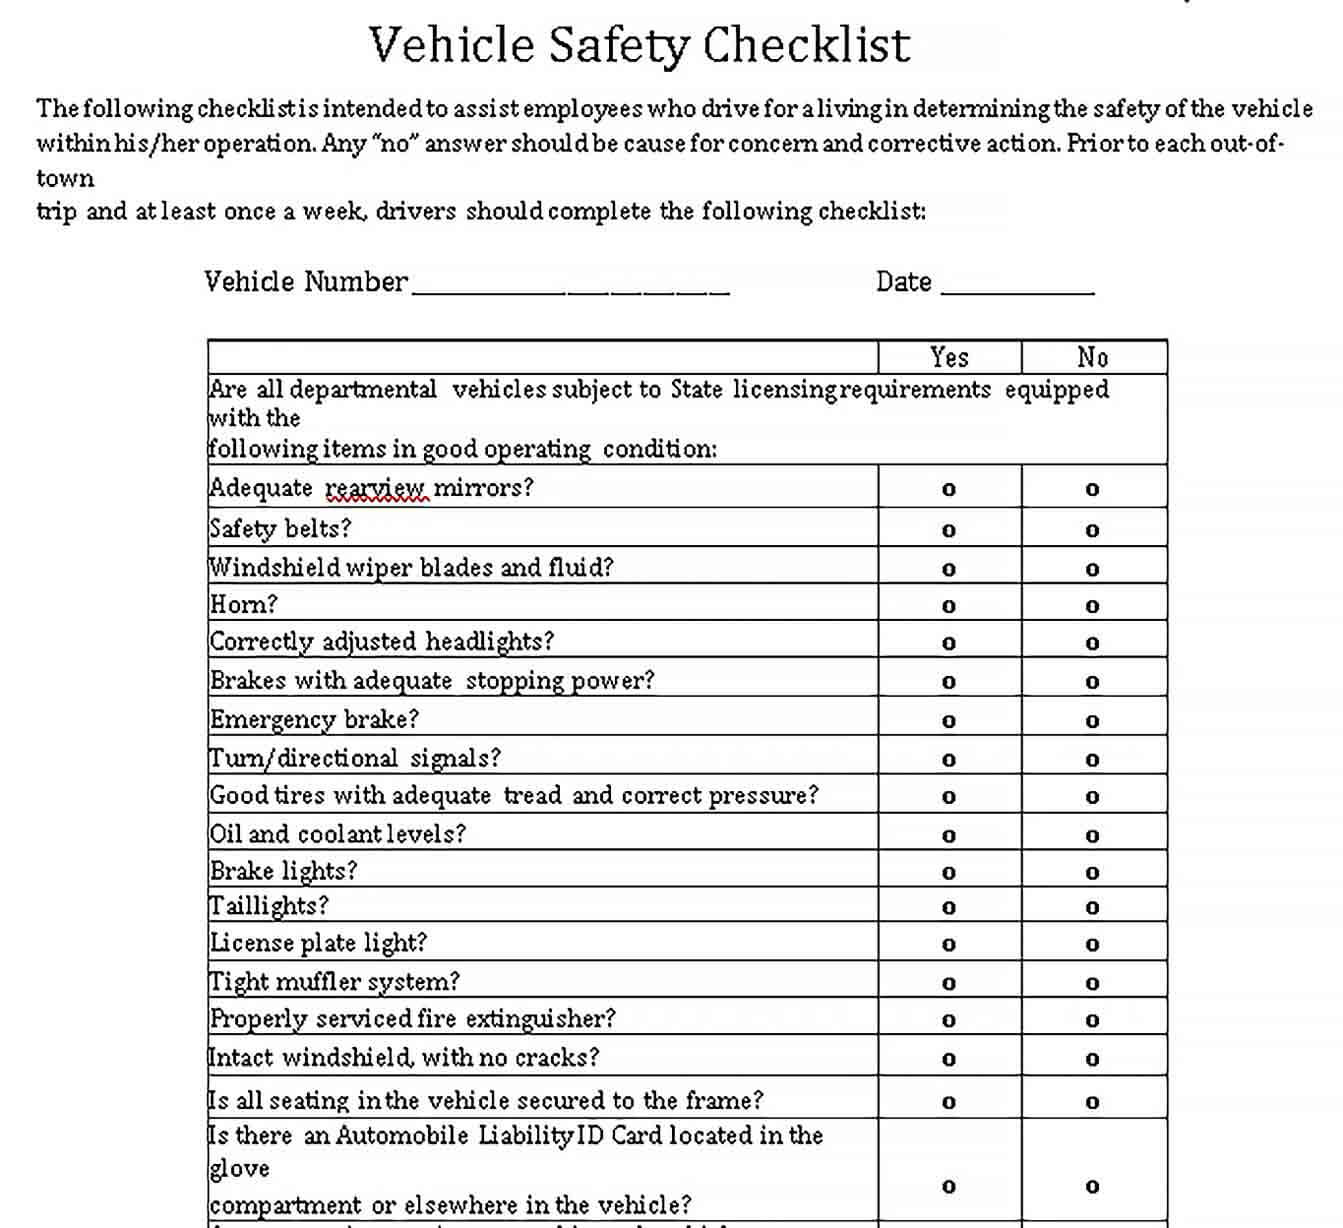 Sample Vehicle Safety